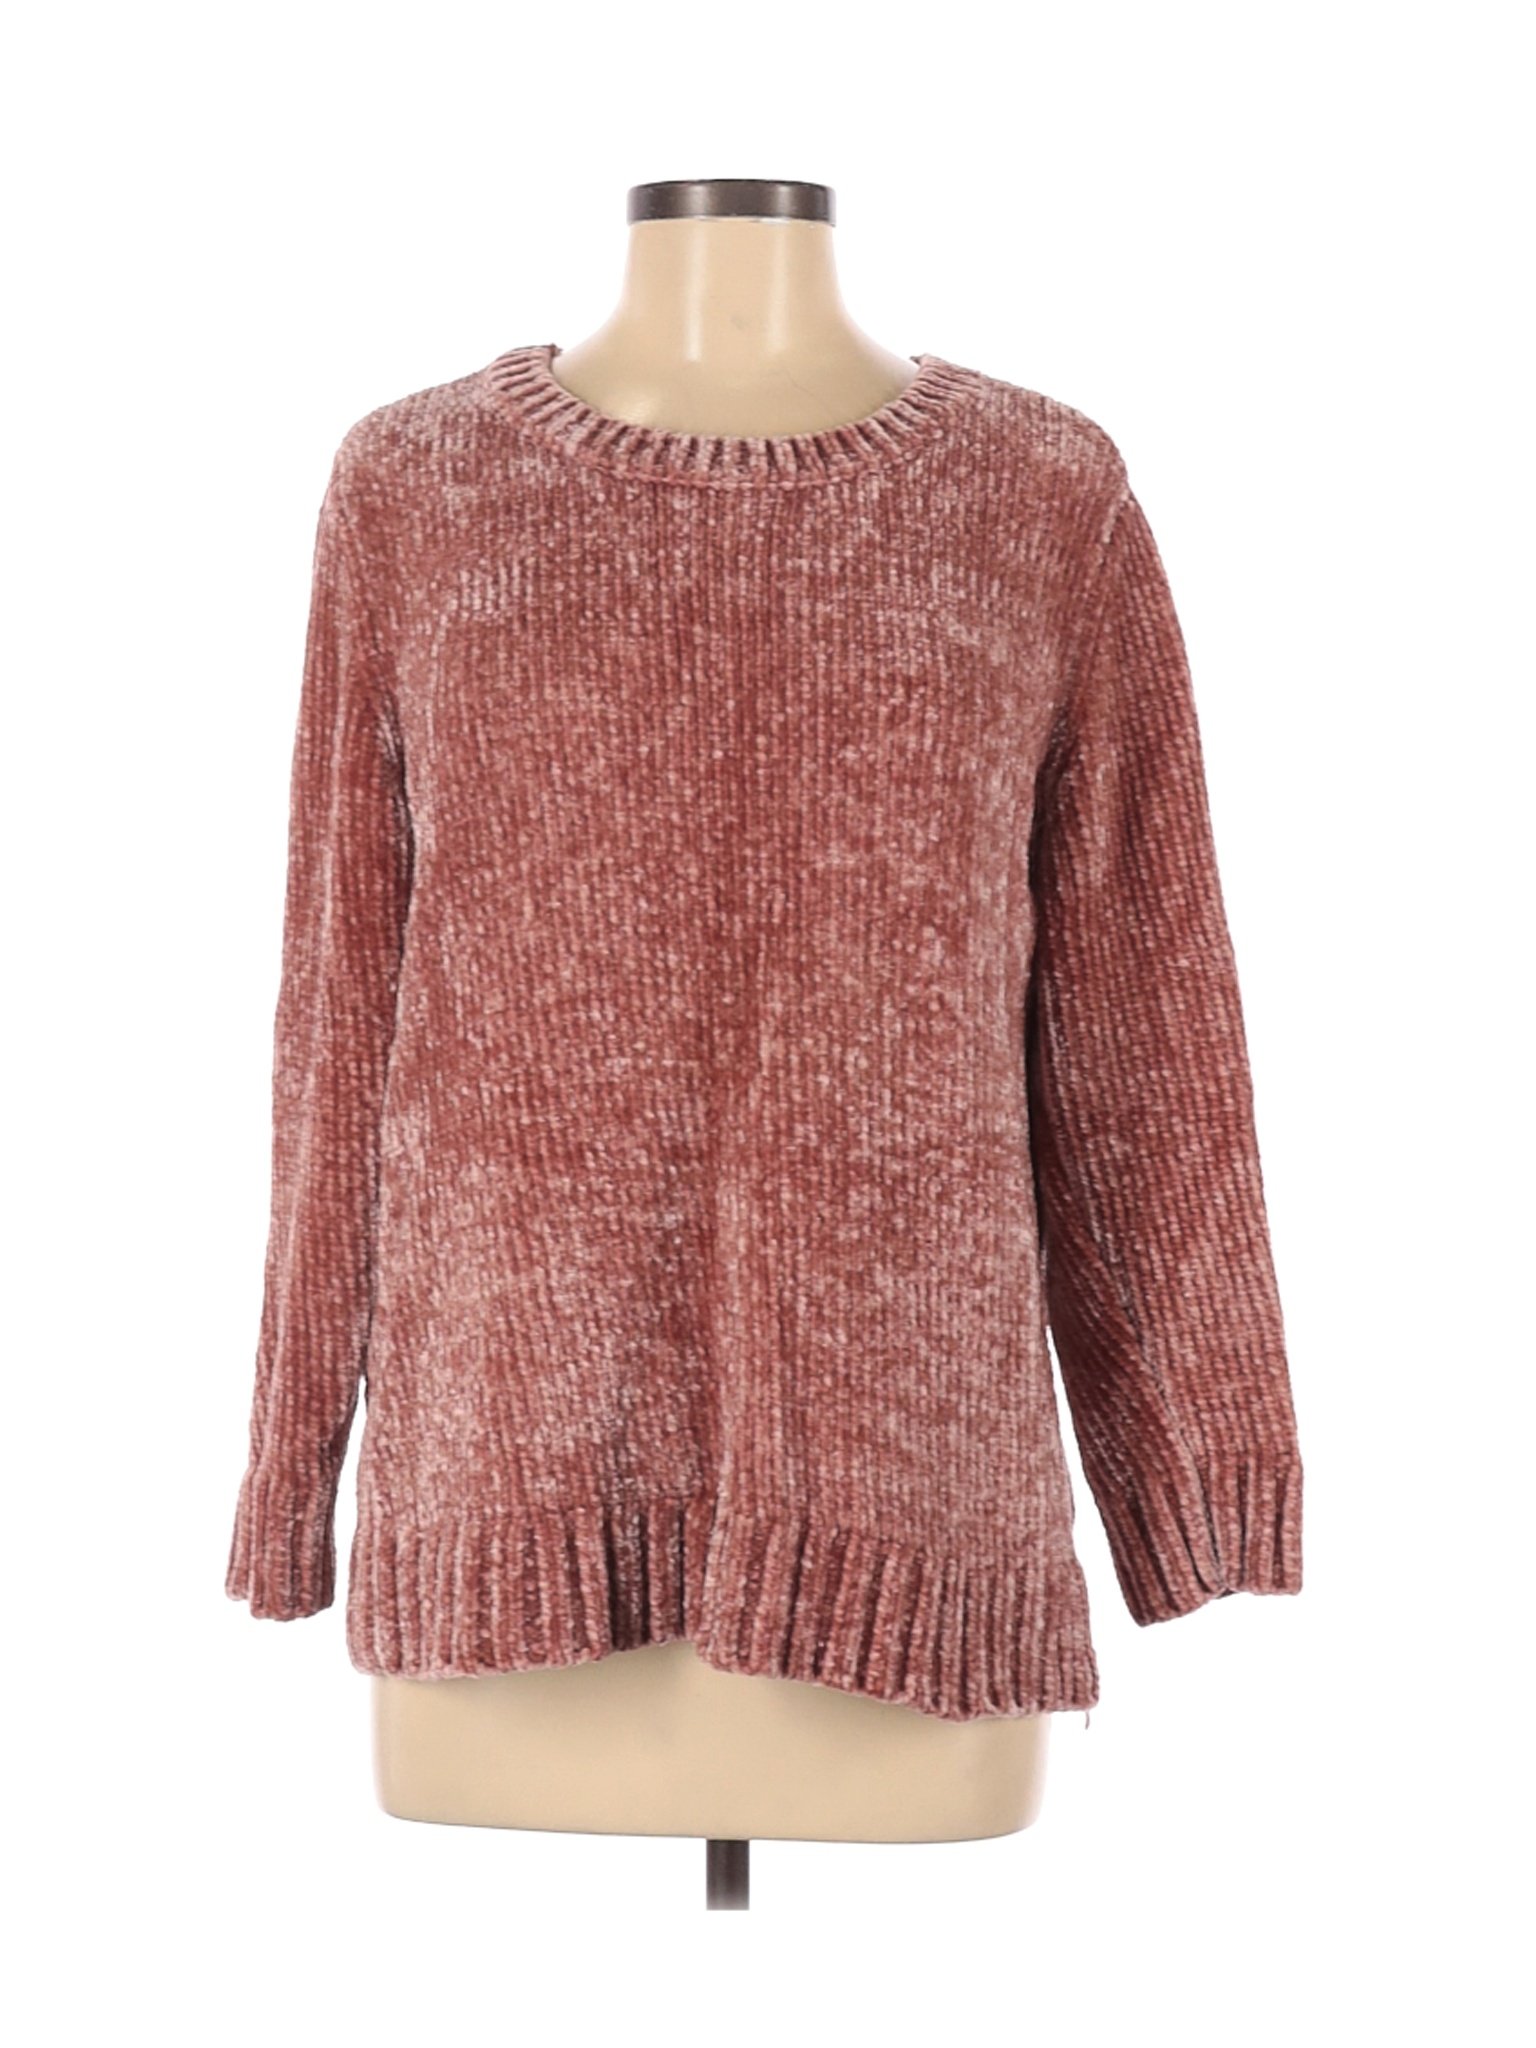 Orvis Women Orange Pullover Sweater M | eBay